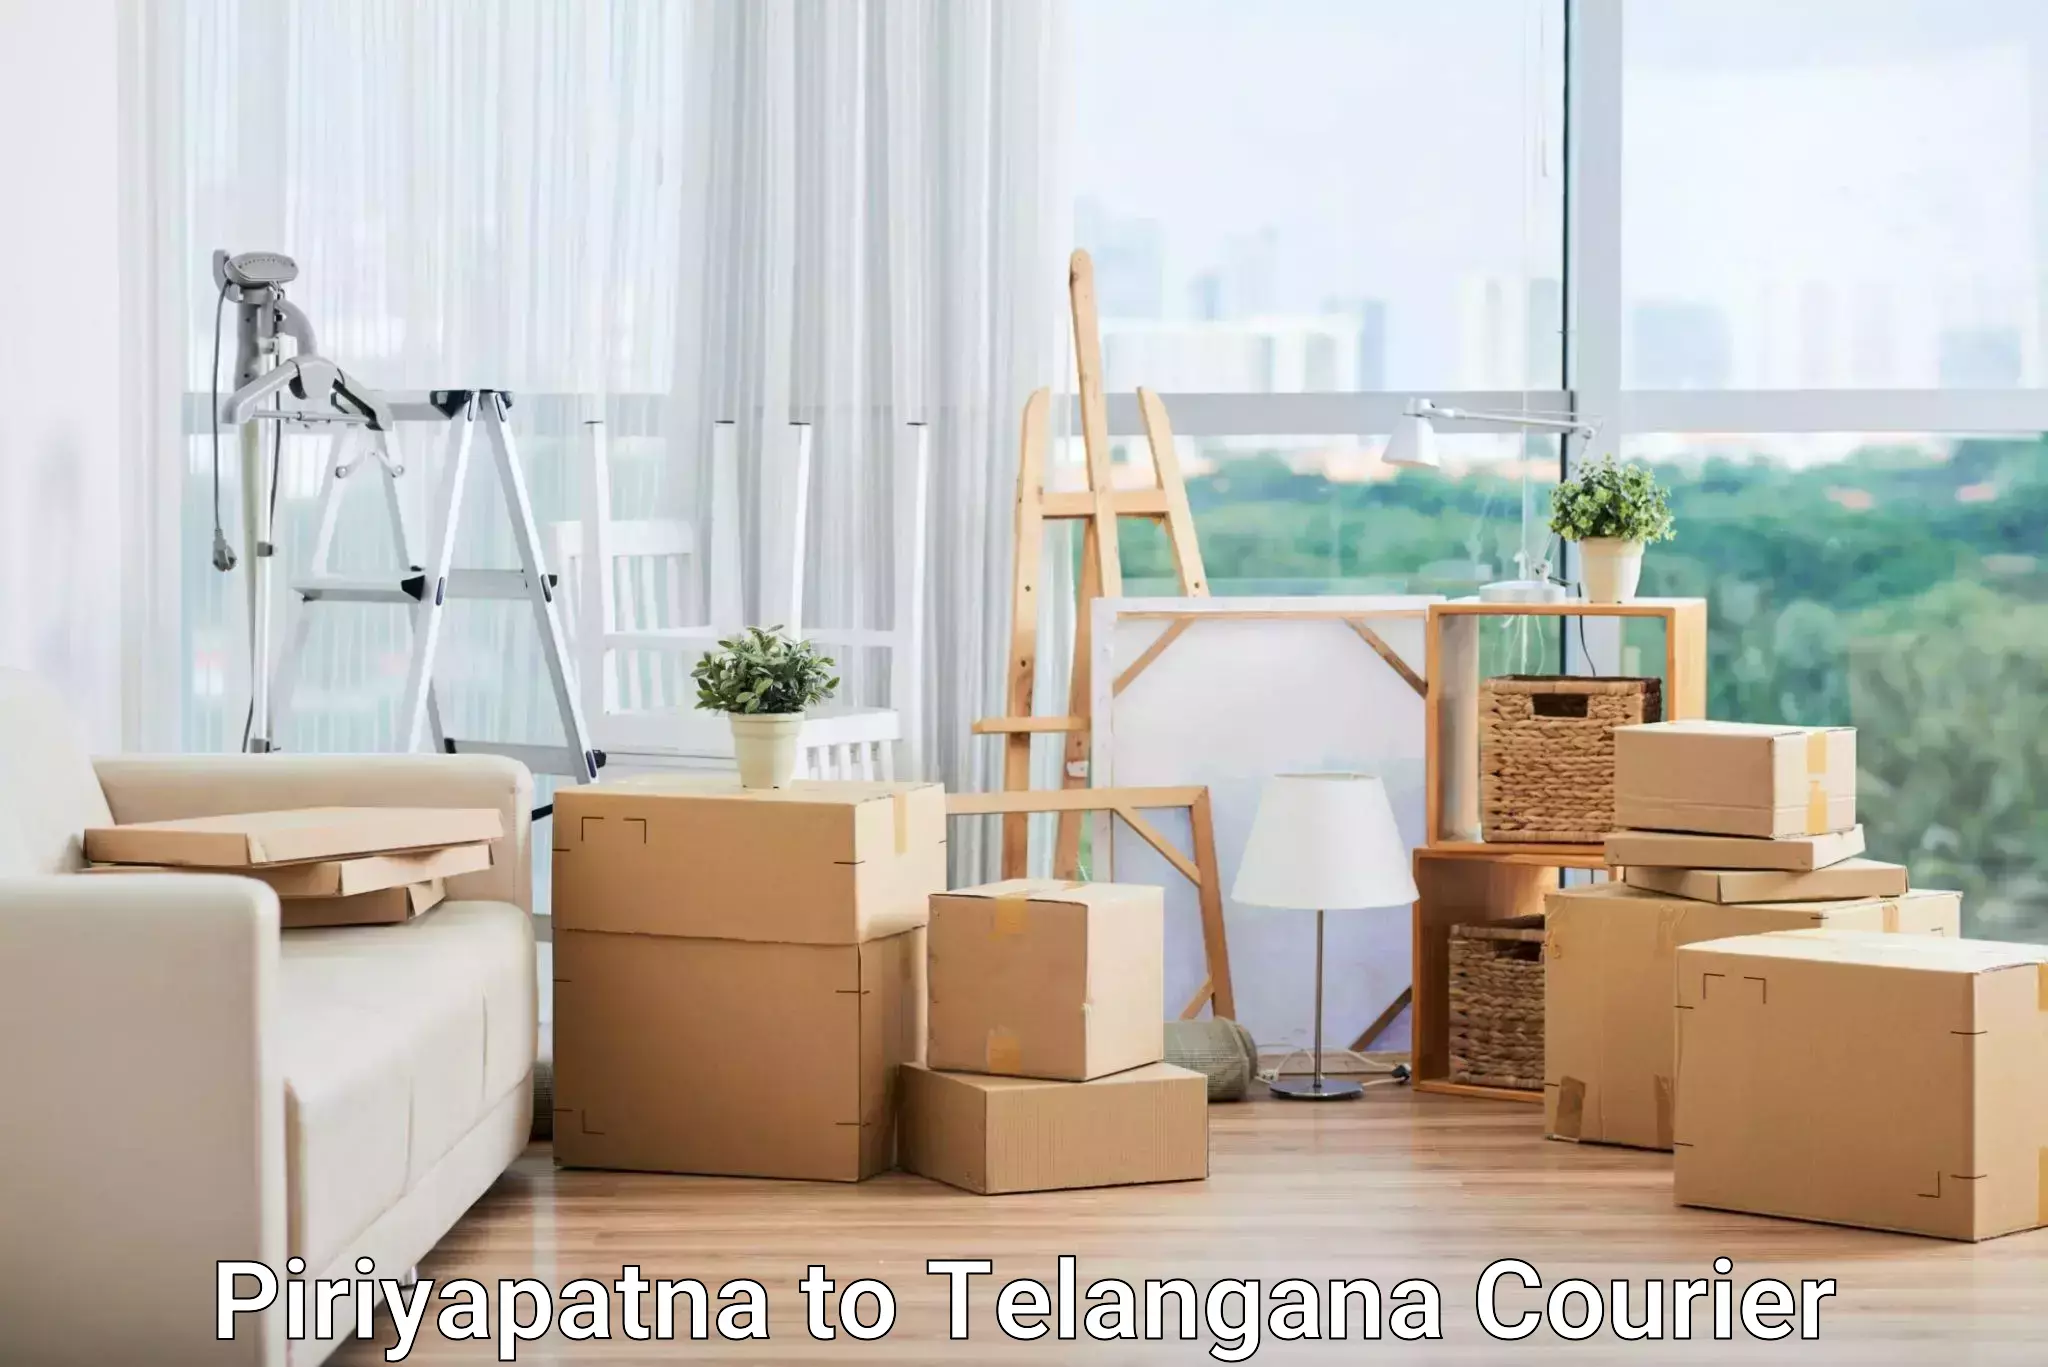 Heavy parcel delivery in Piriyapatna to Tallada